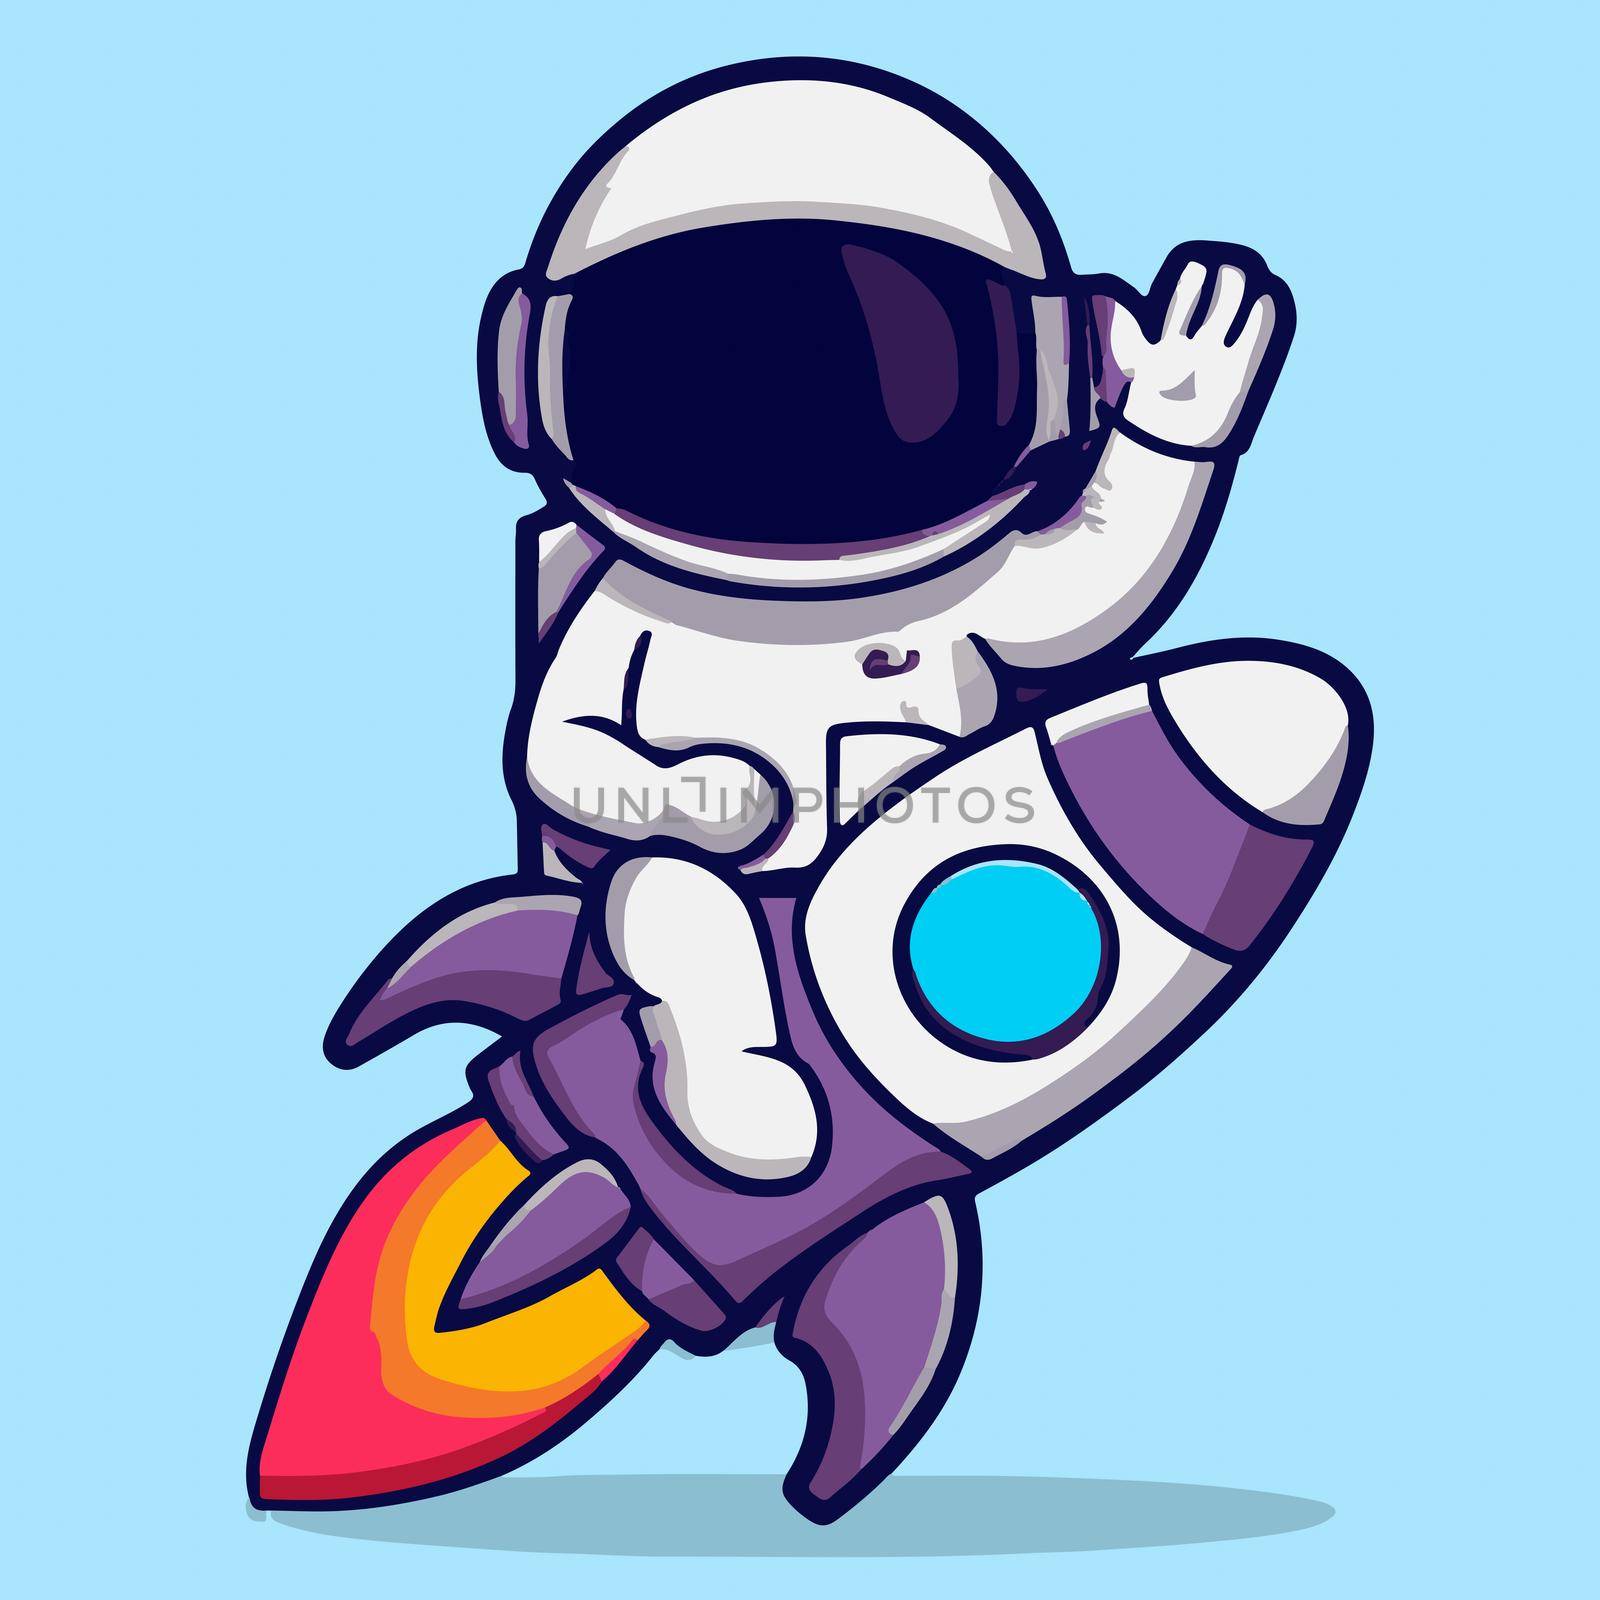 Cartoon illustration of astronaut in his spaceship. cute astronaut animated.